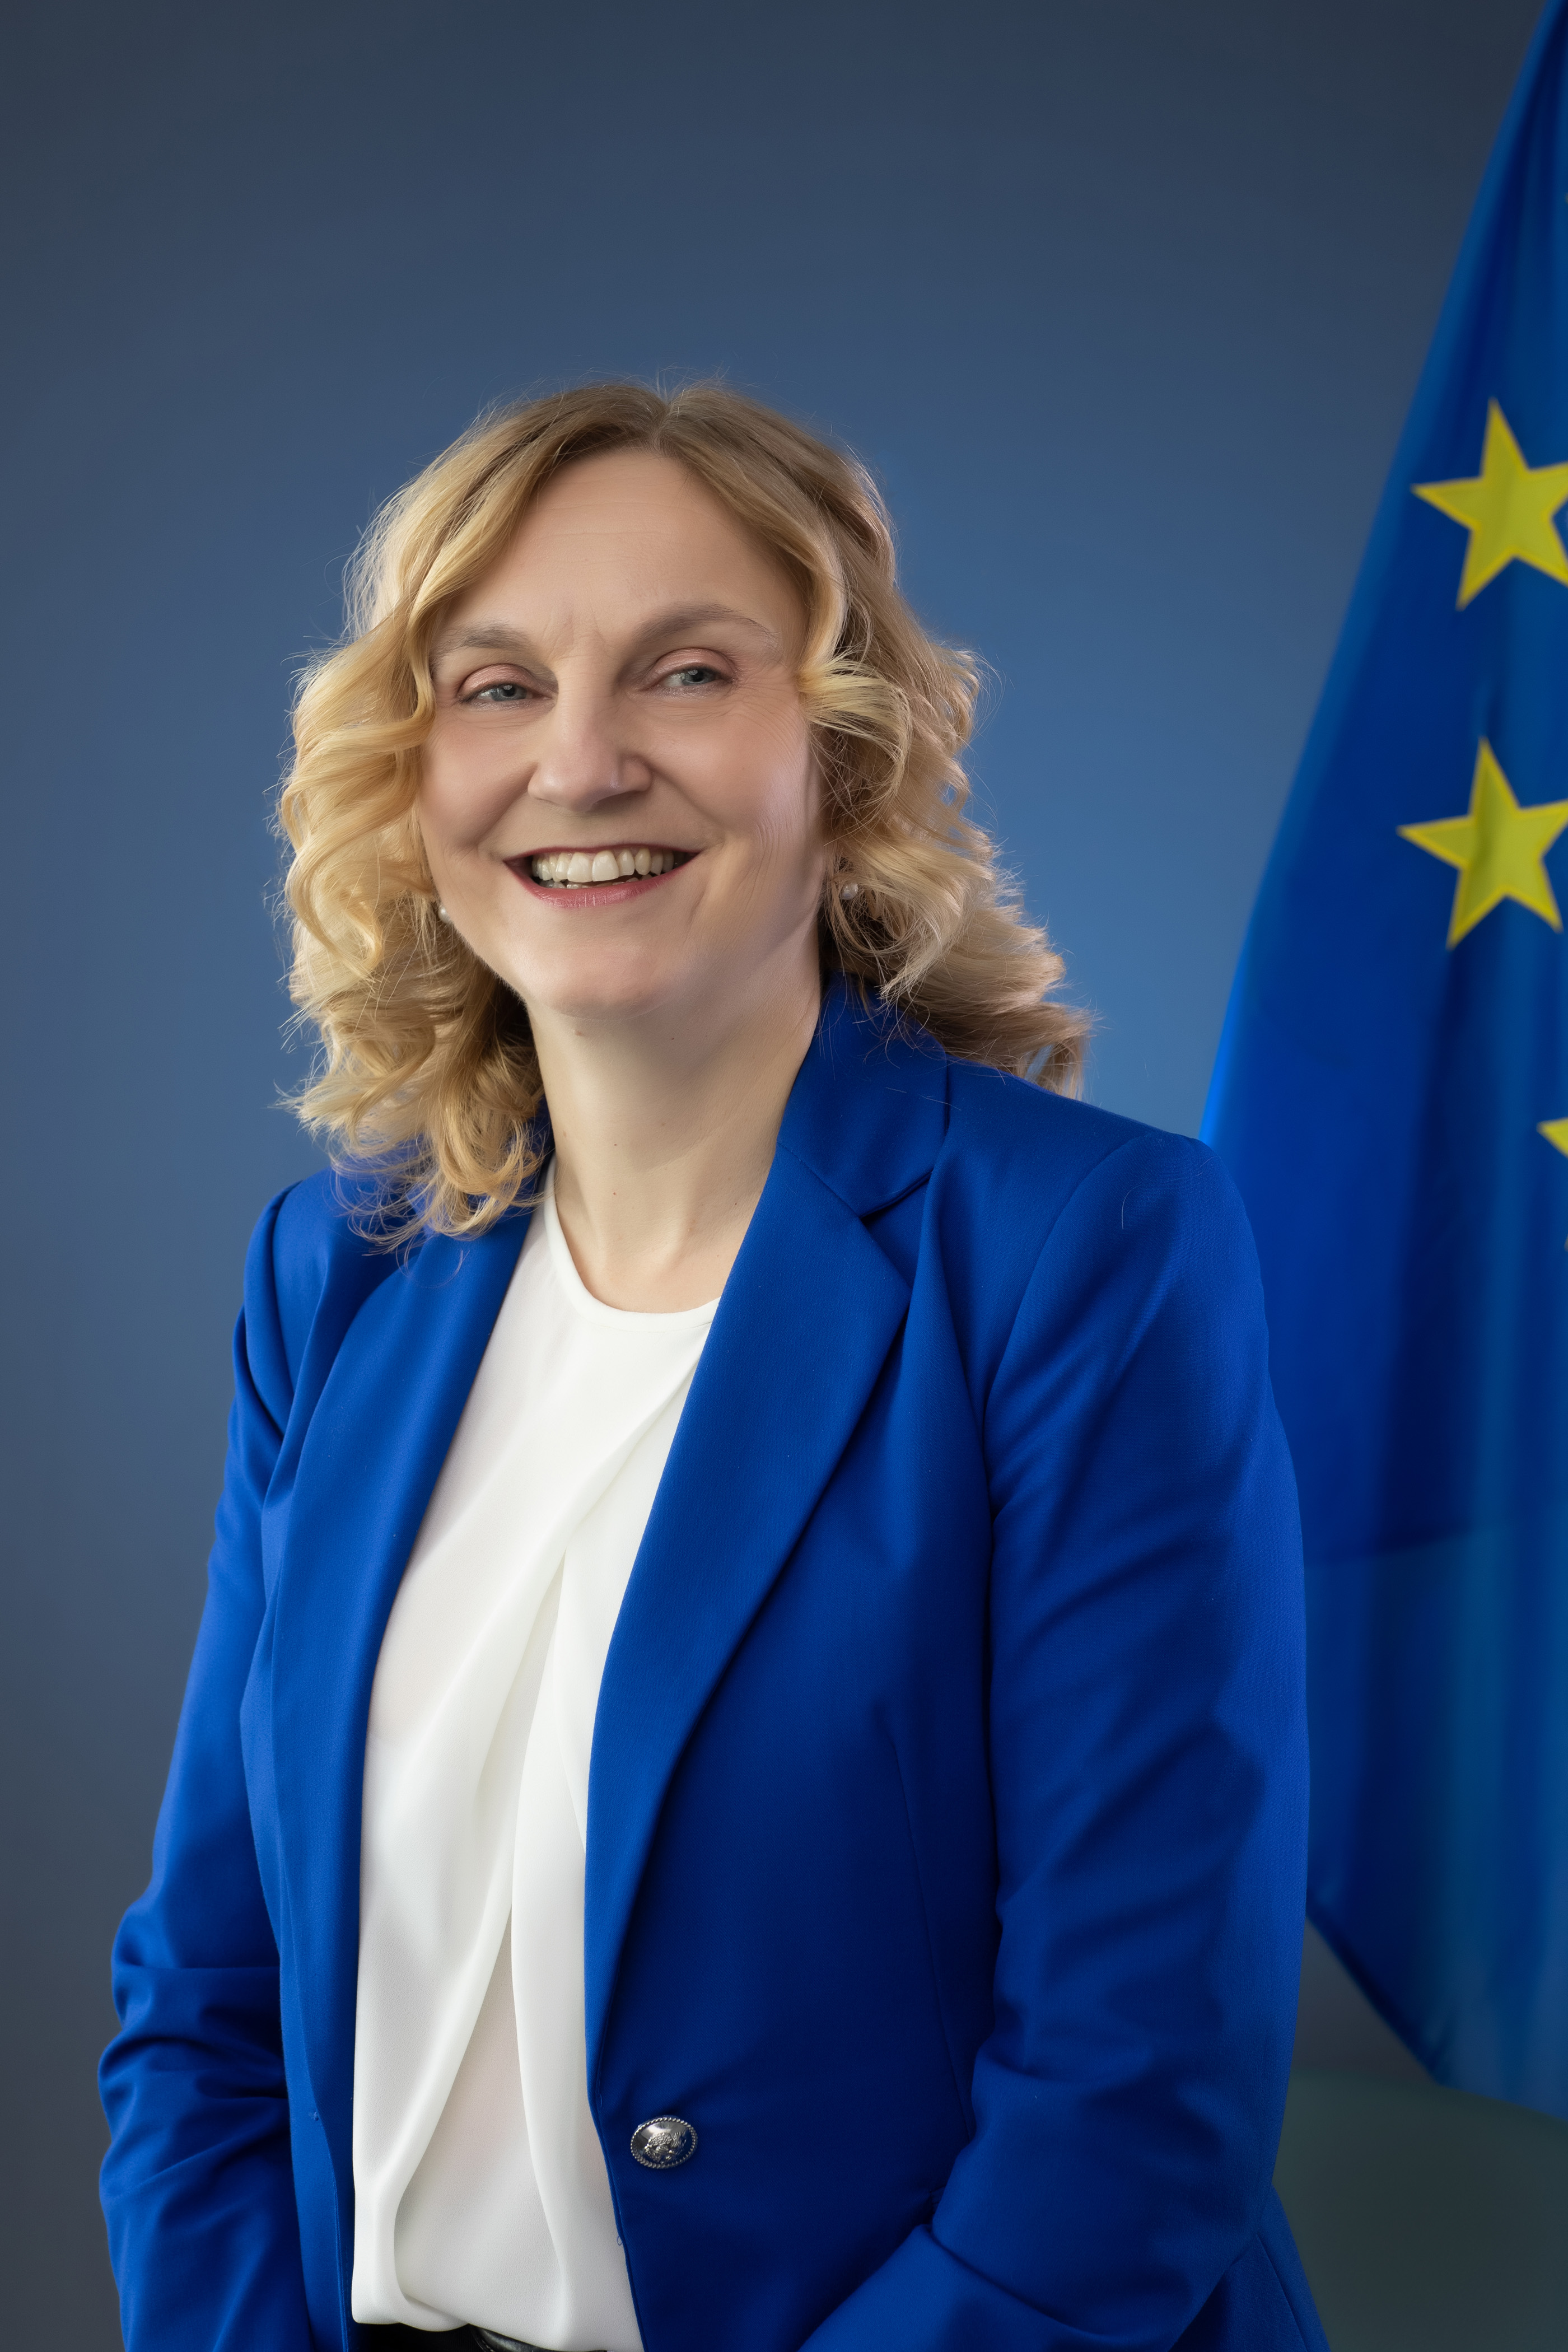 Photograph of European Prosecutor for Croatia Tamara Laptos